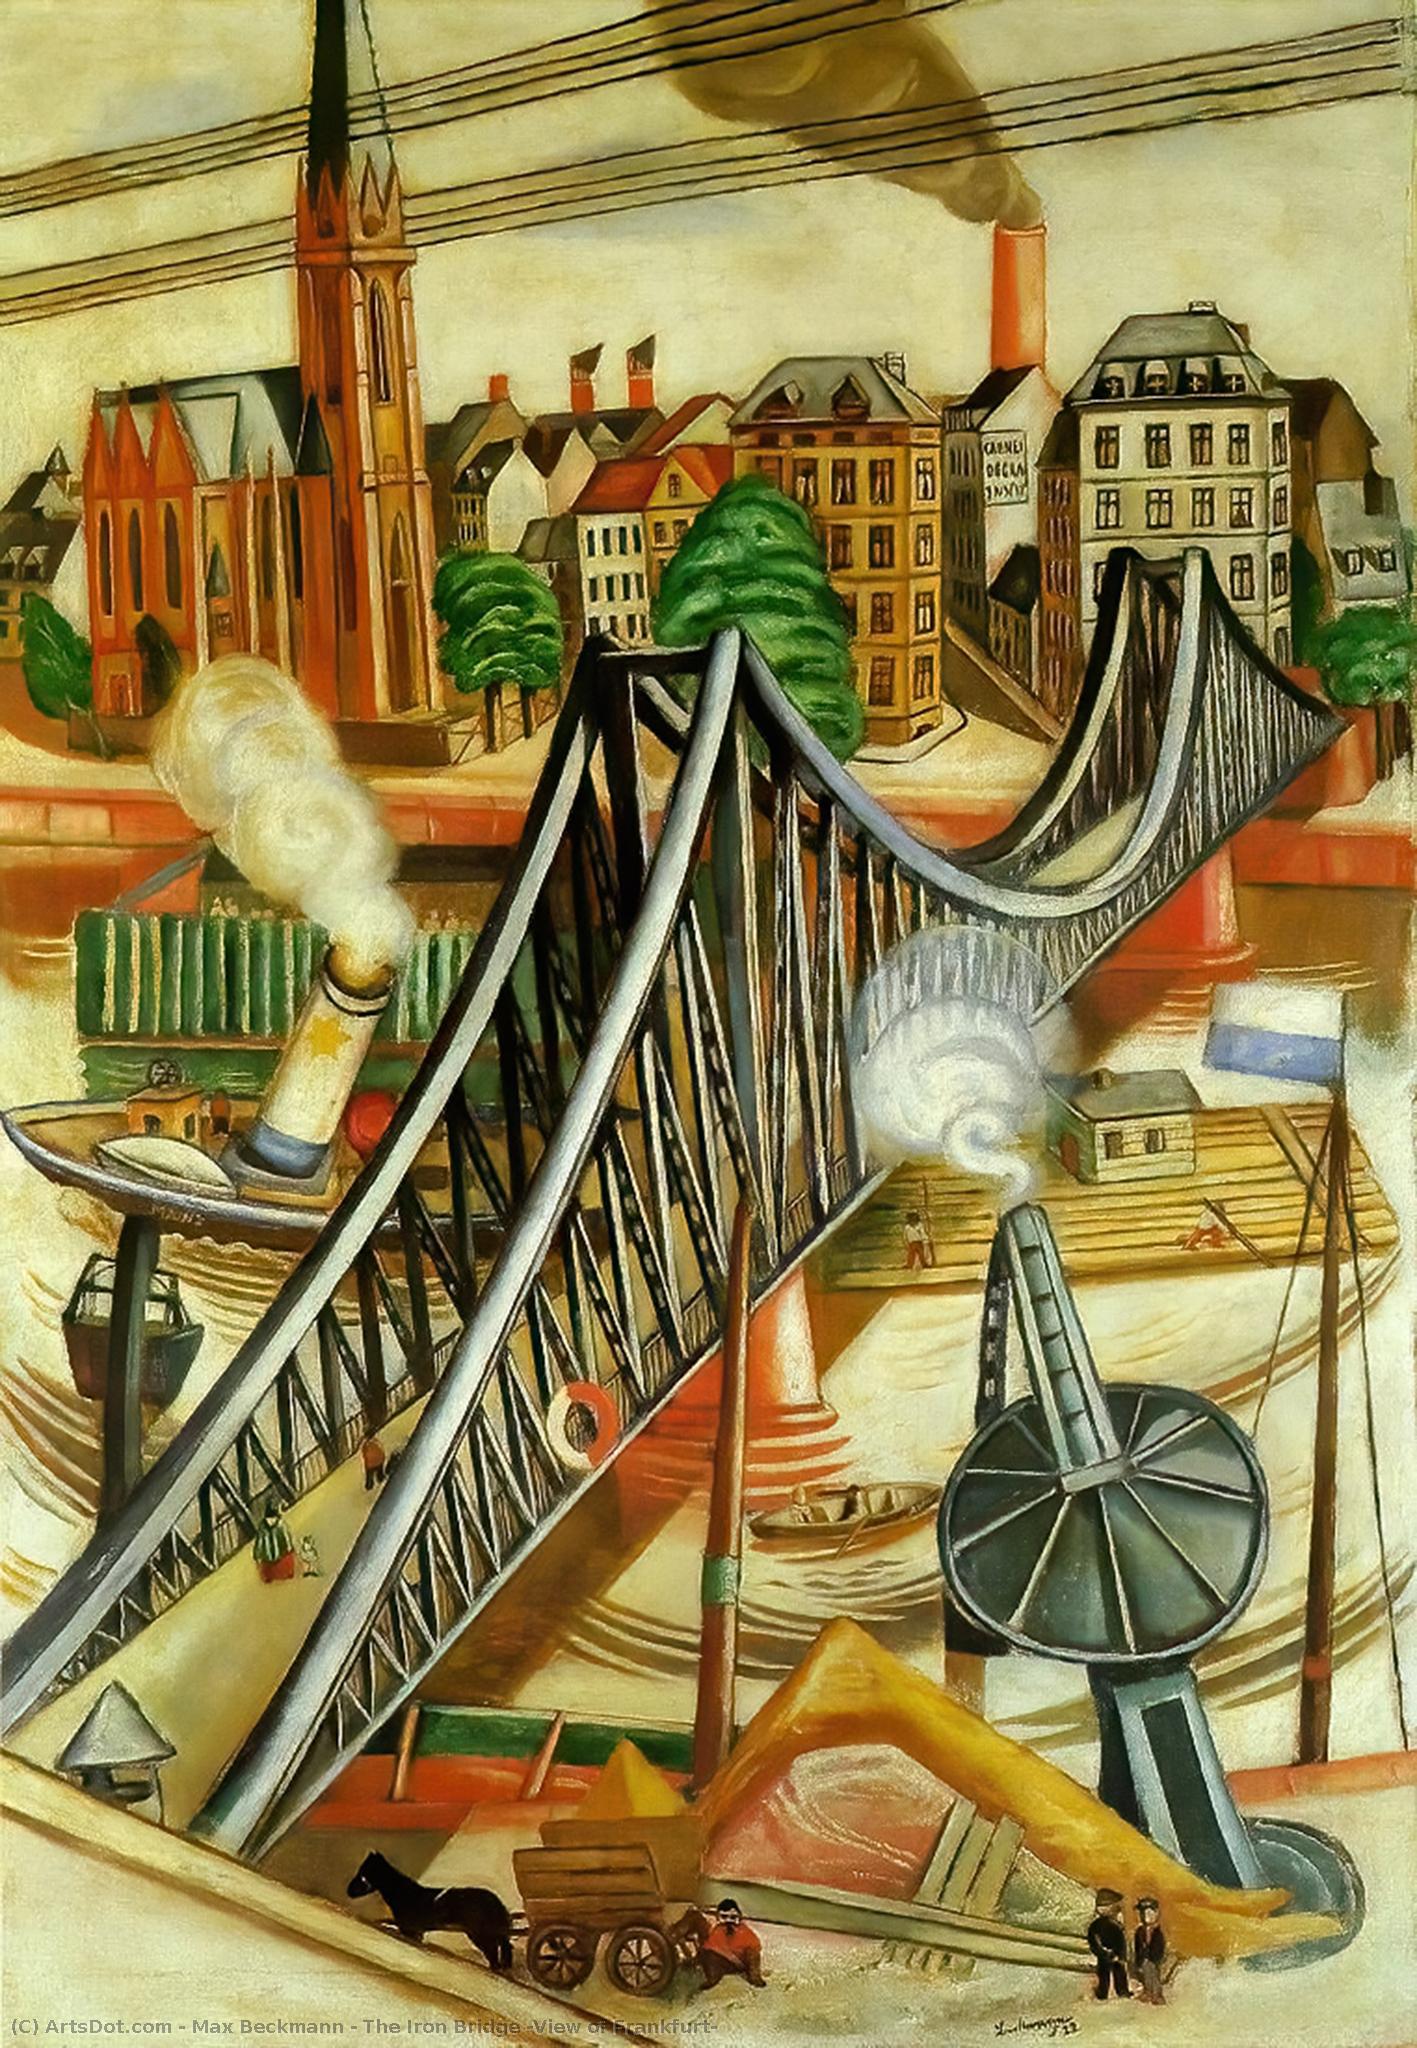  Paintings Reproductions The Iron Bridge (View of Frankfurt), 1922 by Max Beckmann (1884-1950, Germany) | ArtsDot.com